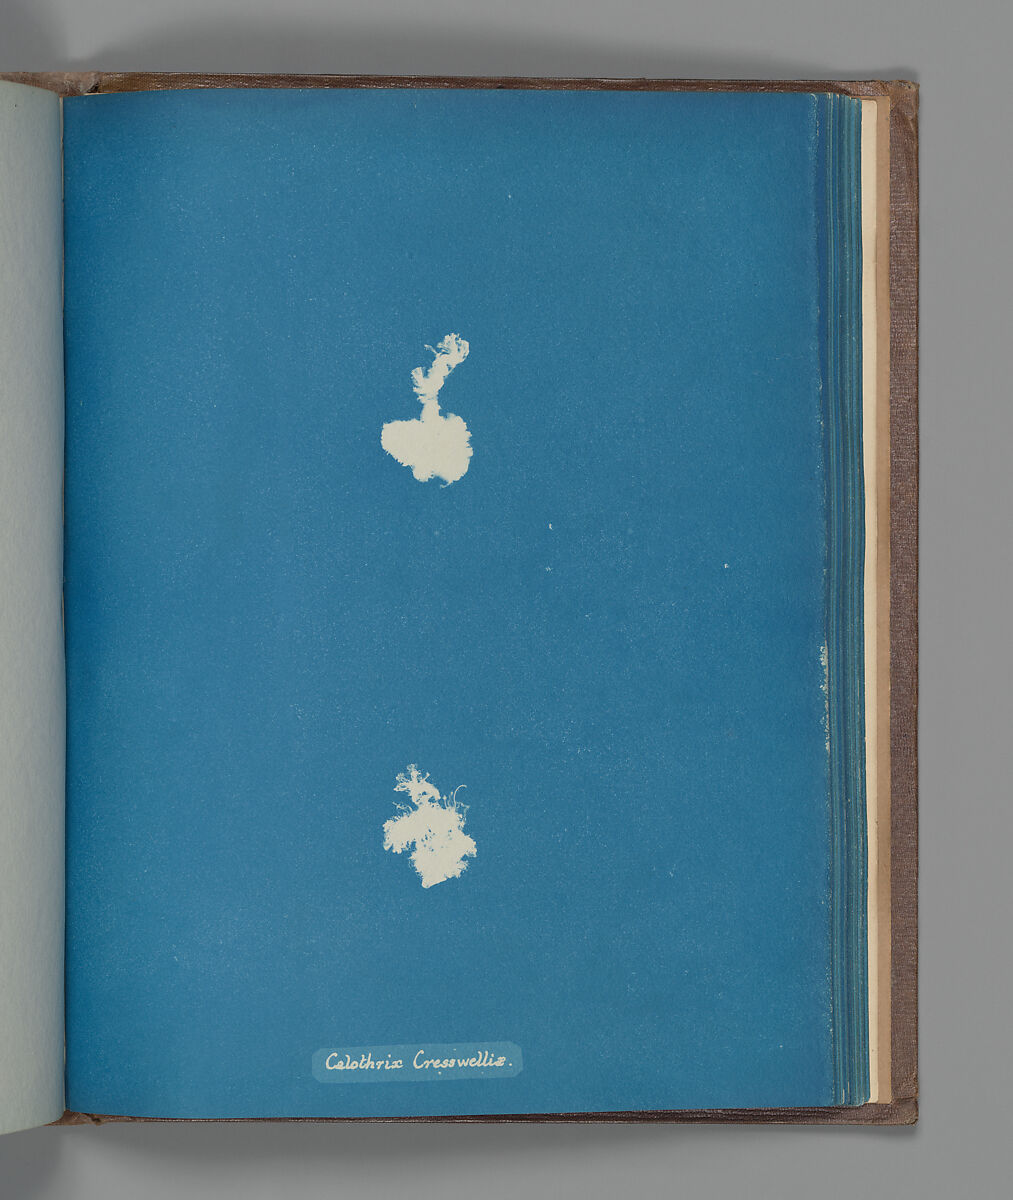 Calothrix Cresswelliæ, Anna Atkins (British, 1799–1871), Cyanotype 